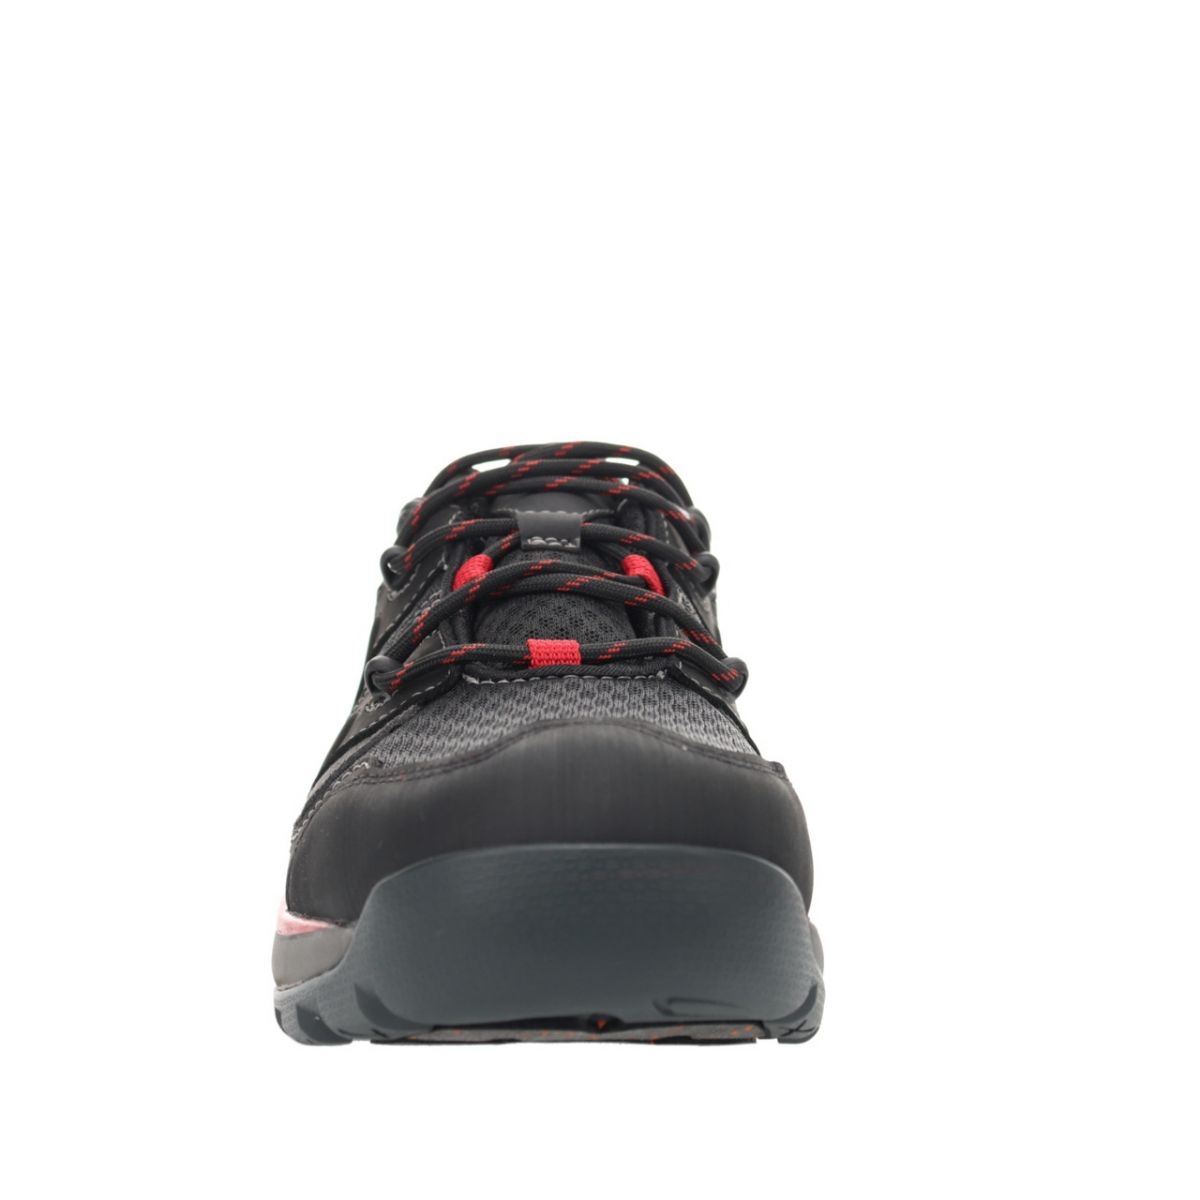 Propet Men's Vercors Hiking Shoe Black/Red - MOA002SBRD BLACK/RED - BLACK/RED, 14 X-Wide